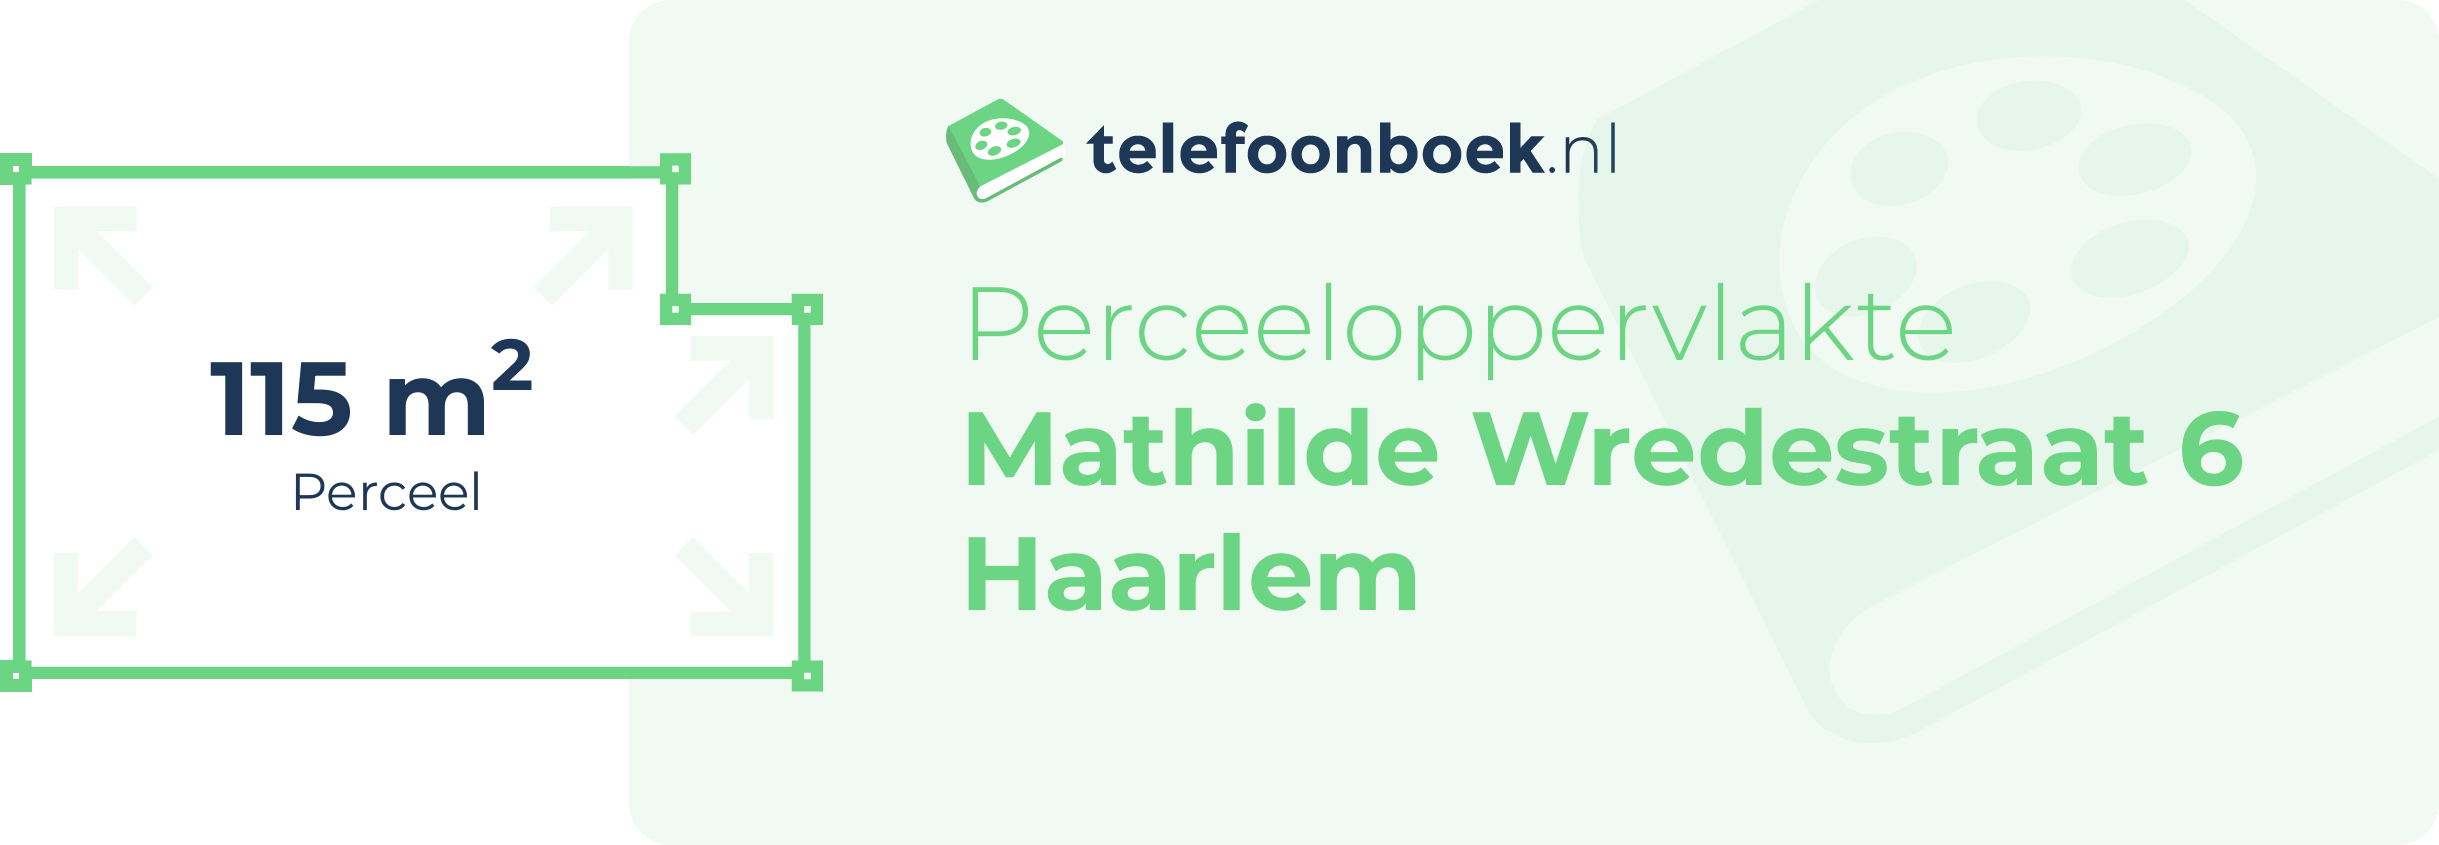 Perceeloppervlakte Mathilde Wredestraat 6 Haarlem